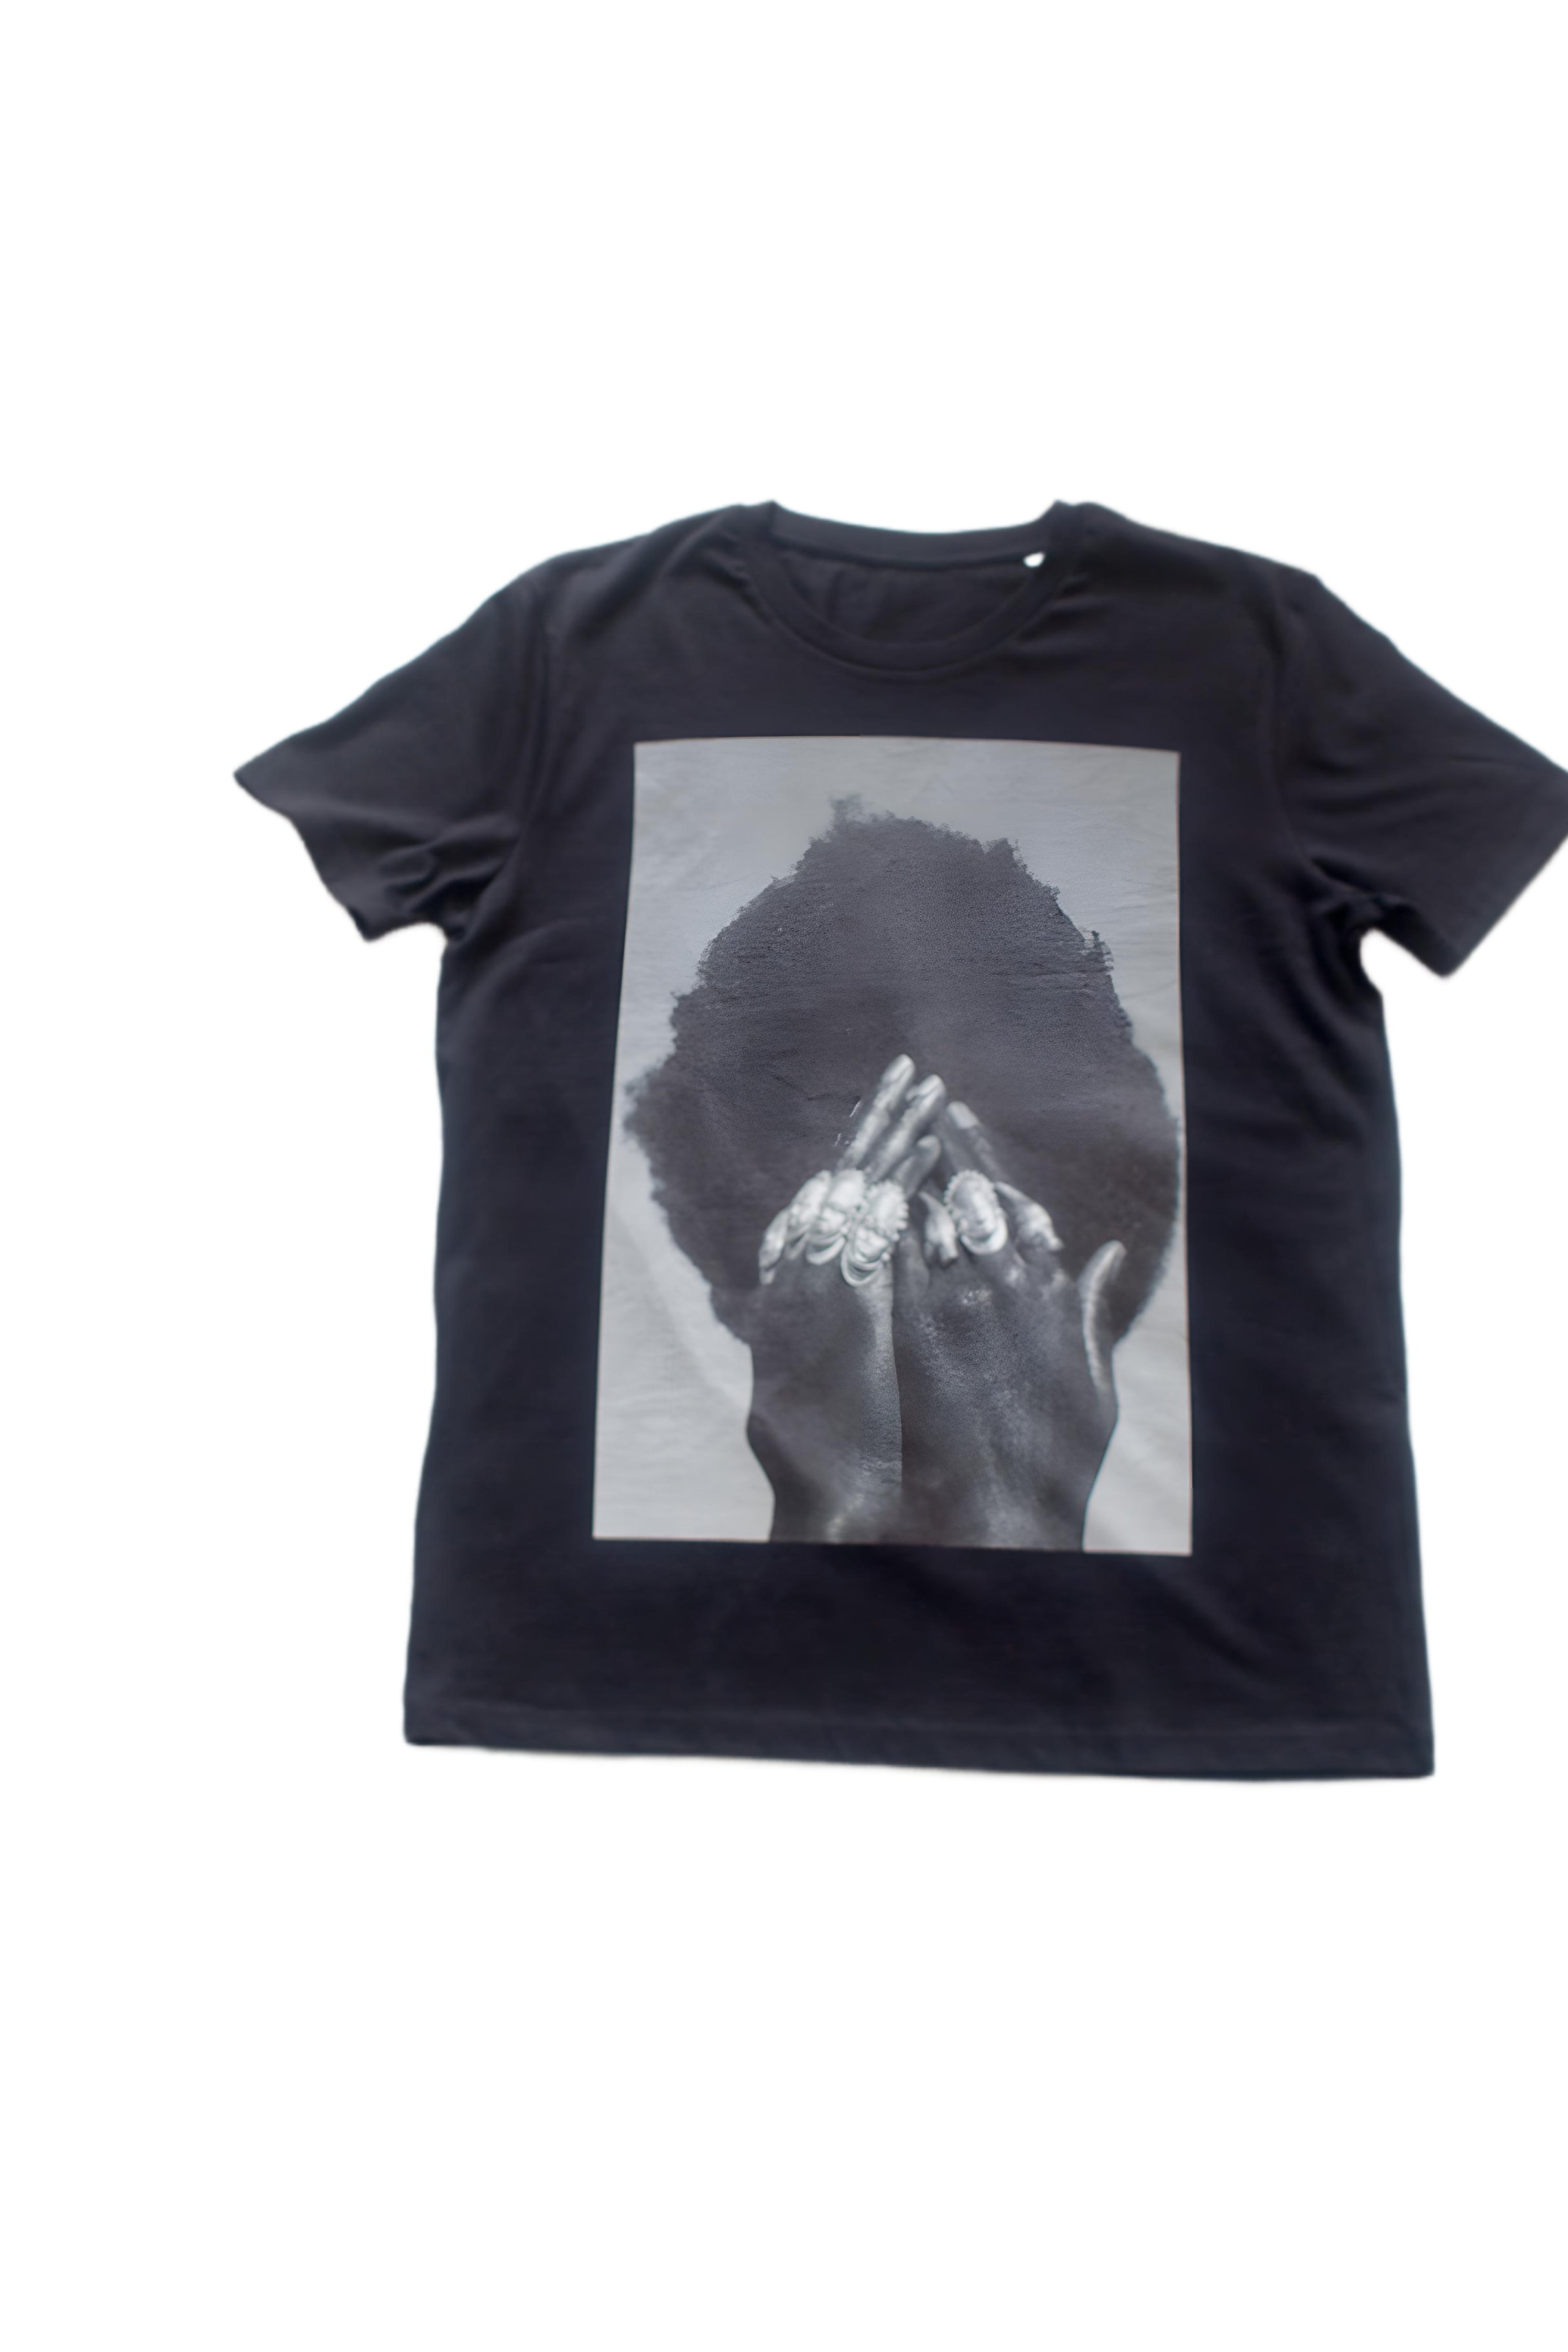 "The Hidden Oba" T-Shirt (Black)